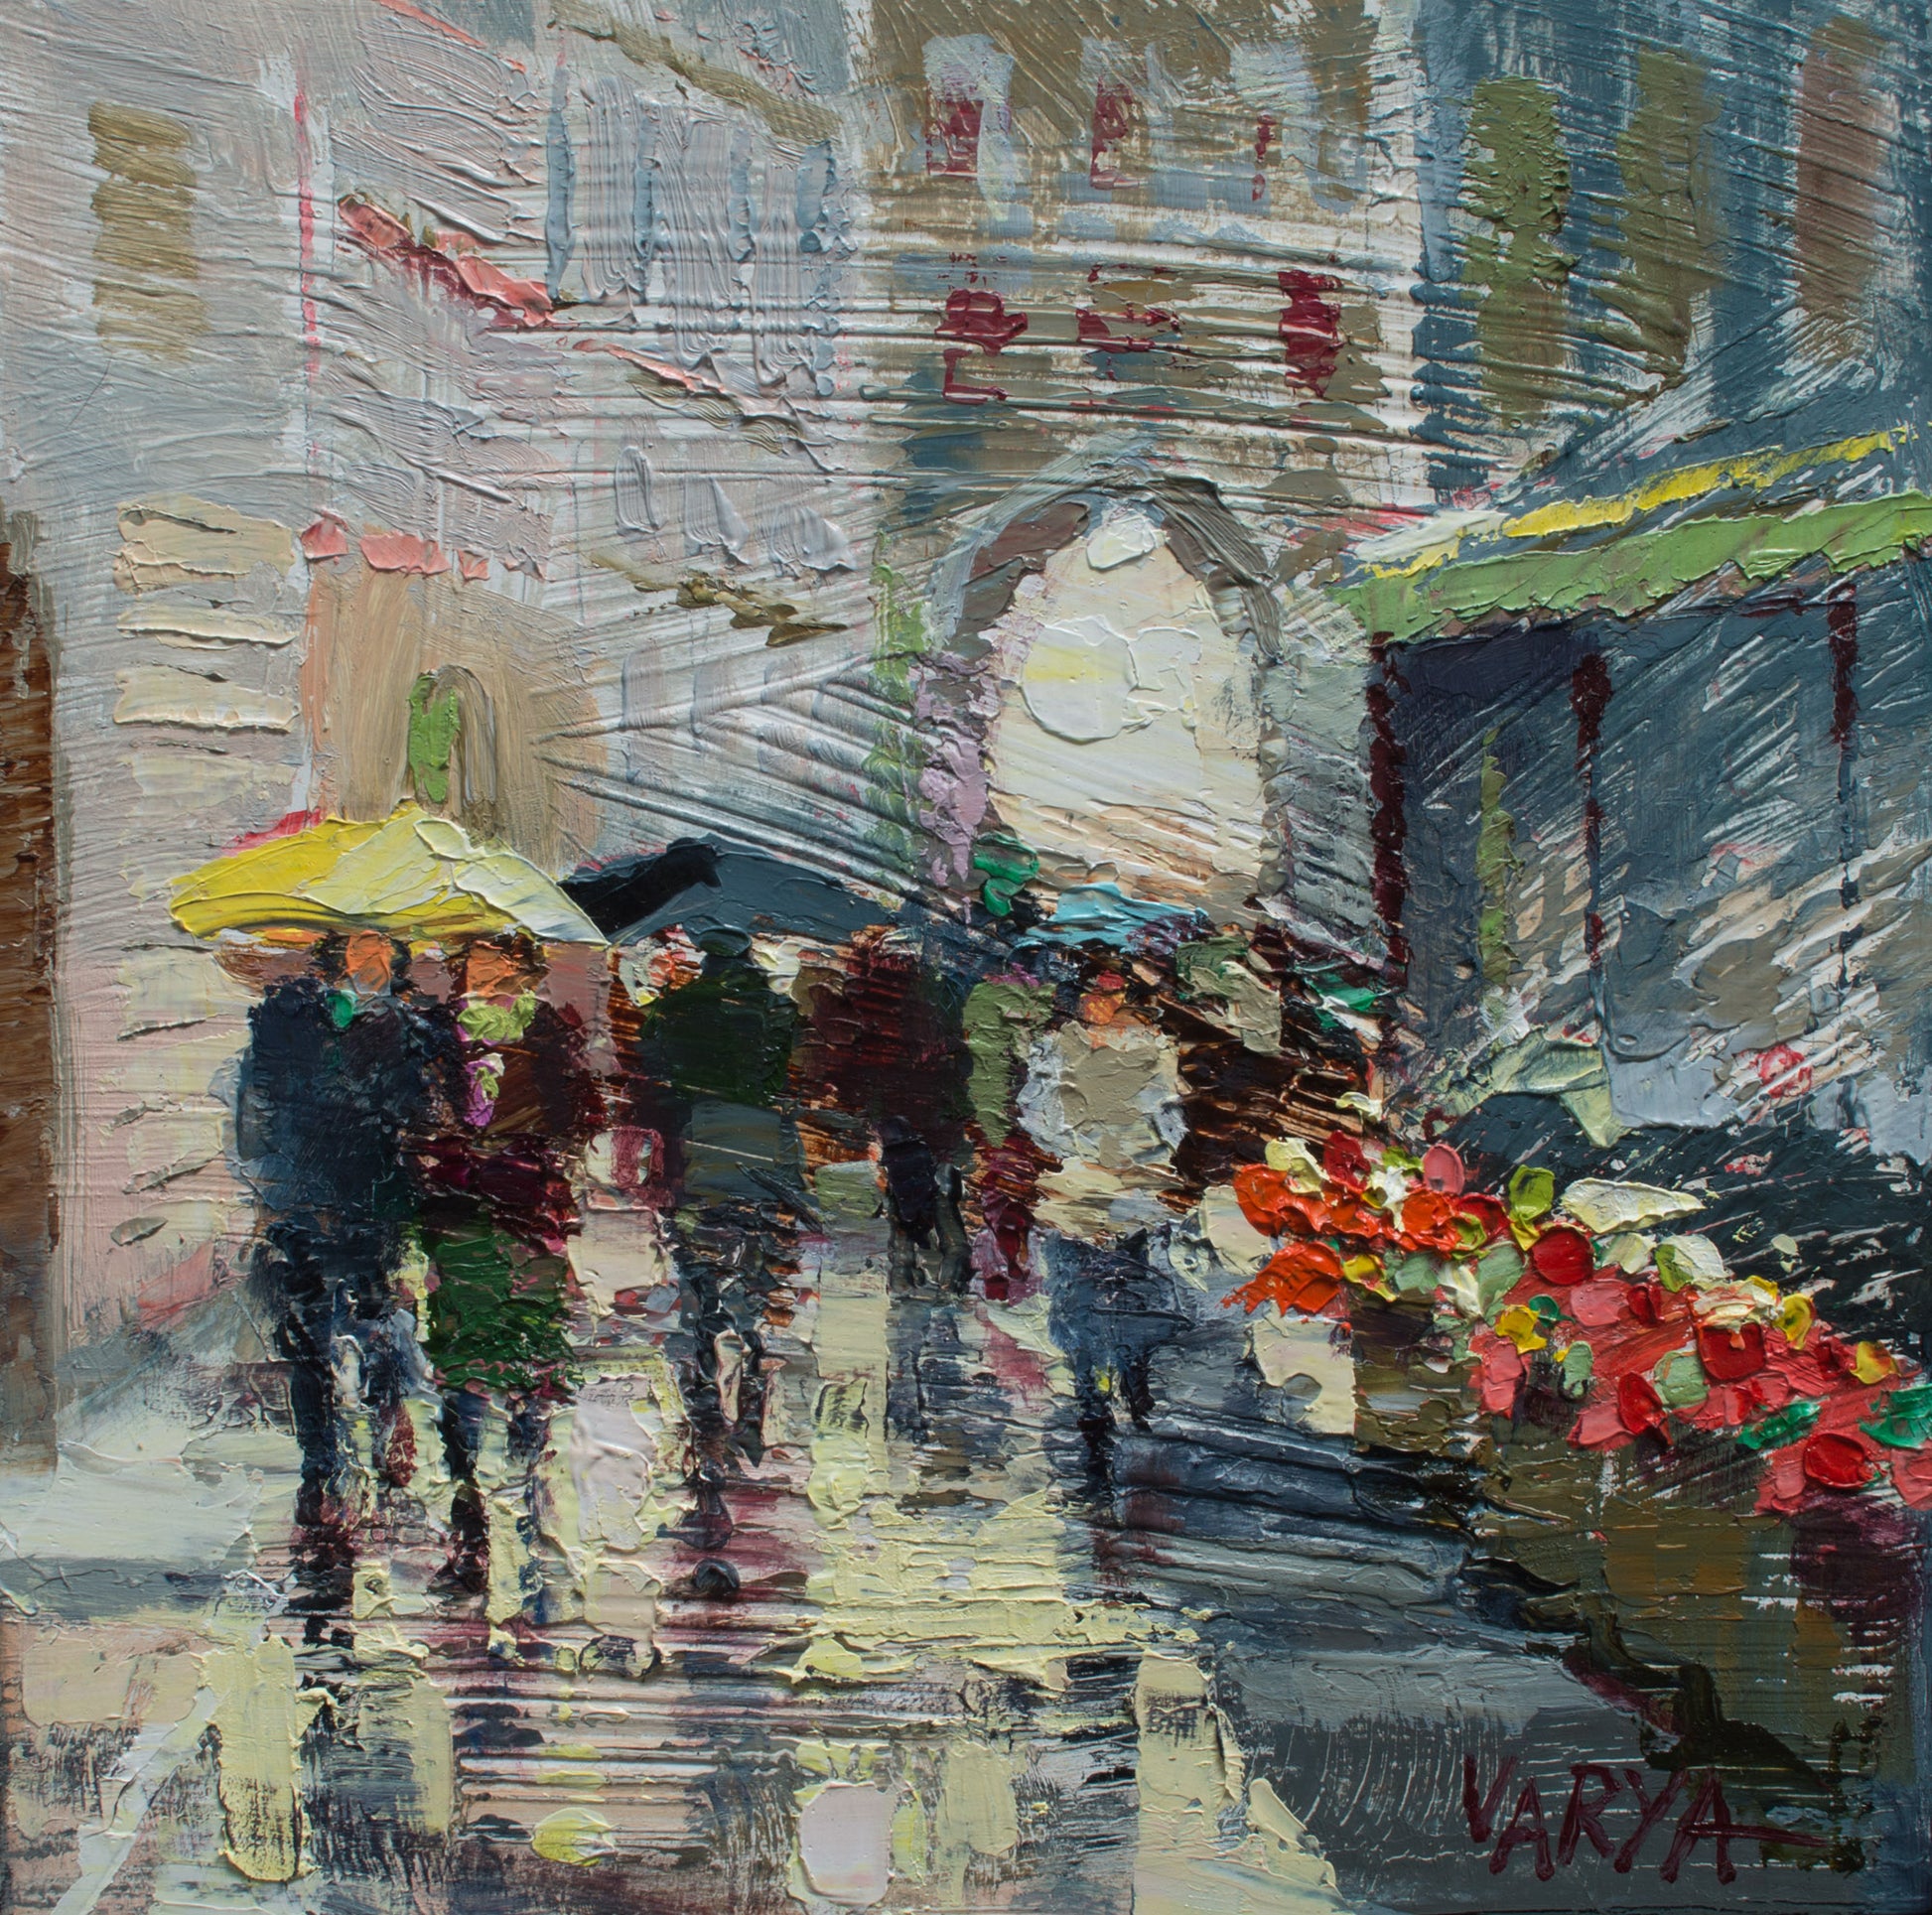 Prague rainy street scene painting